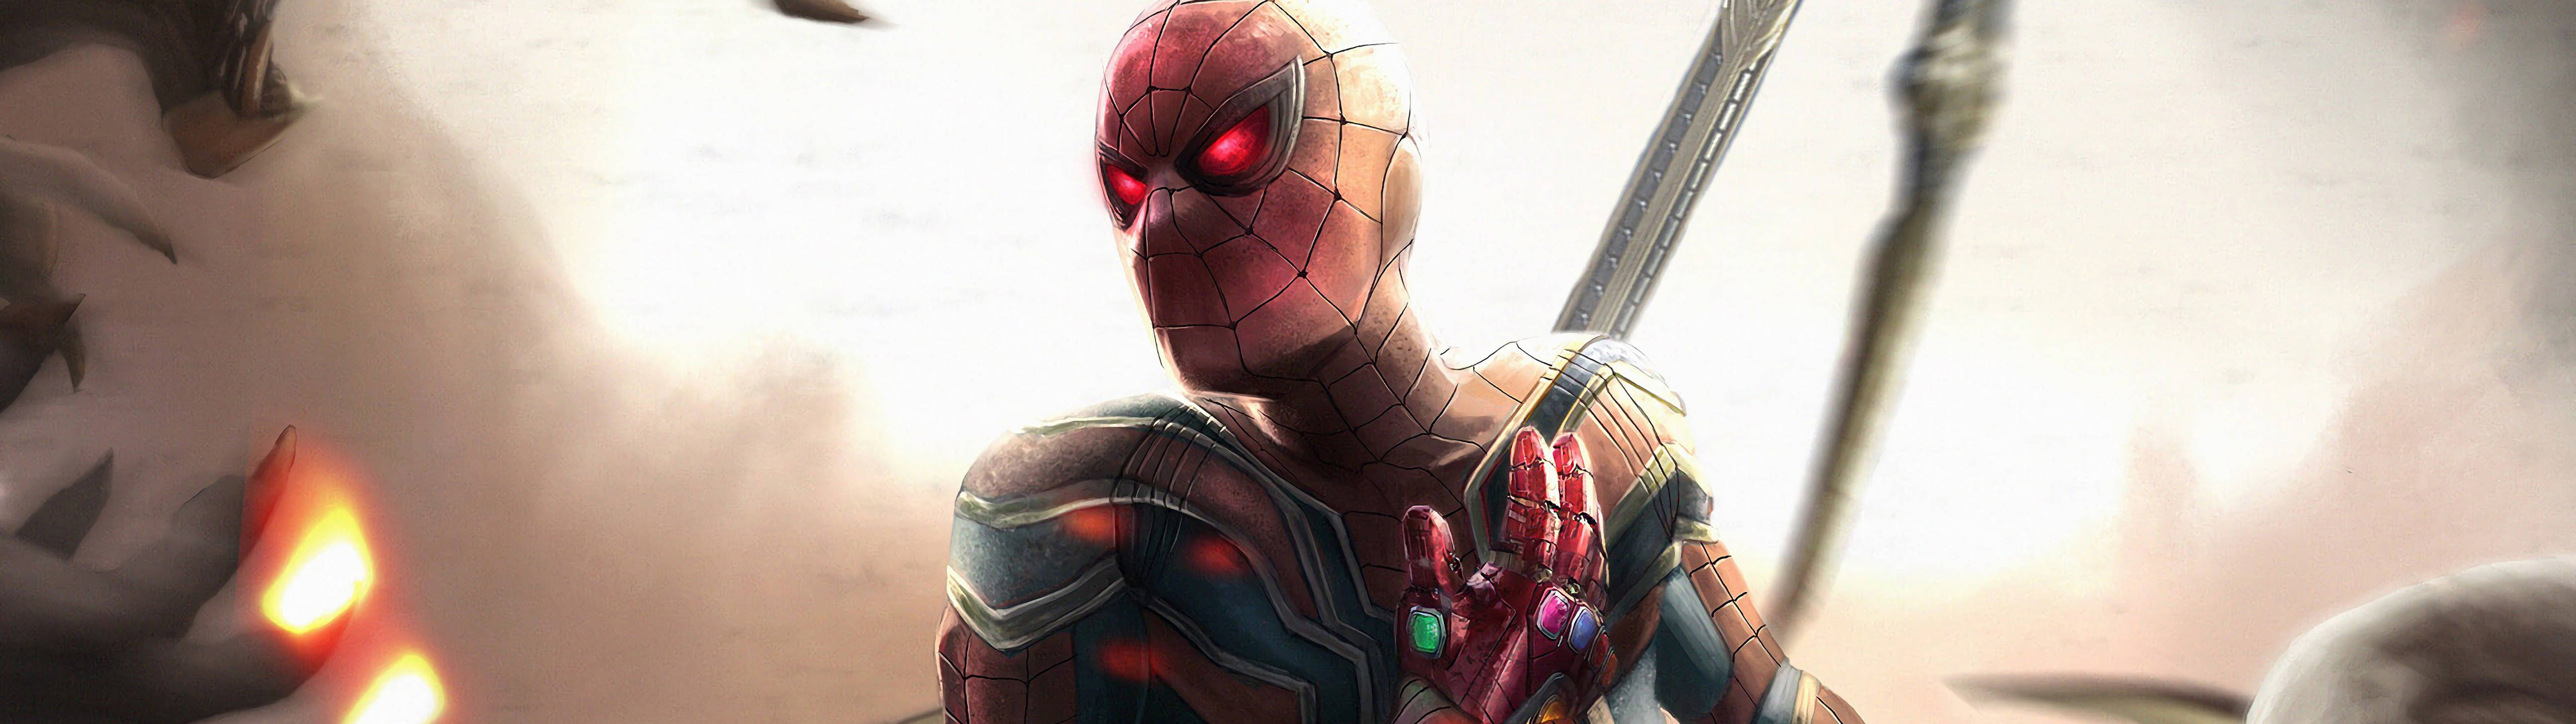 Marvel's Spiderman With Infinity Gauntlet 5120 X 1440 Background